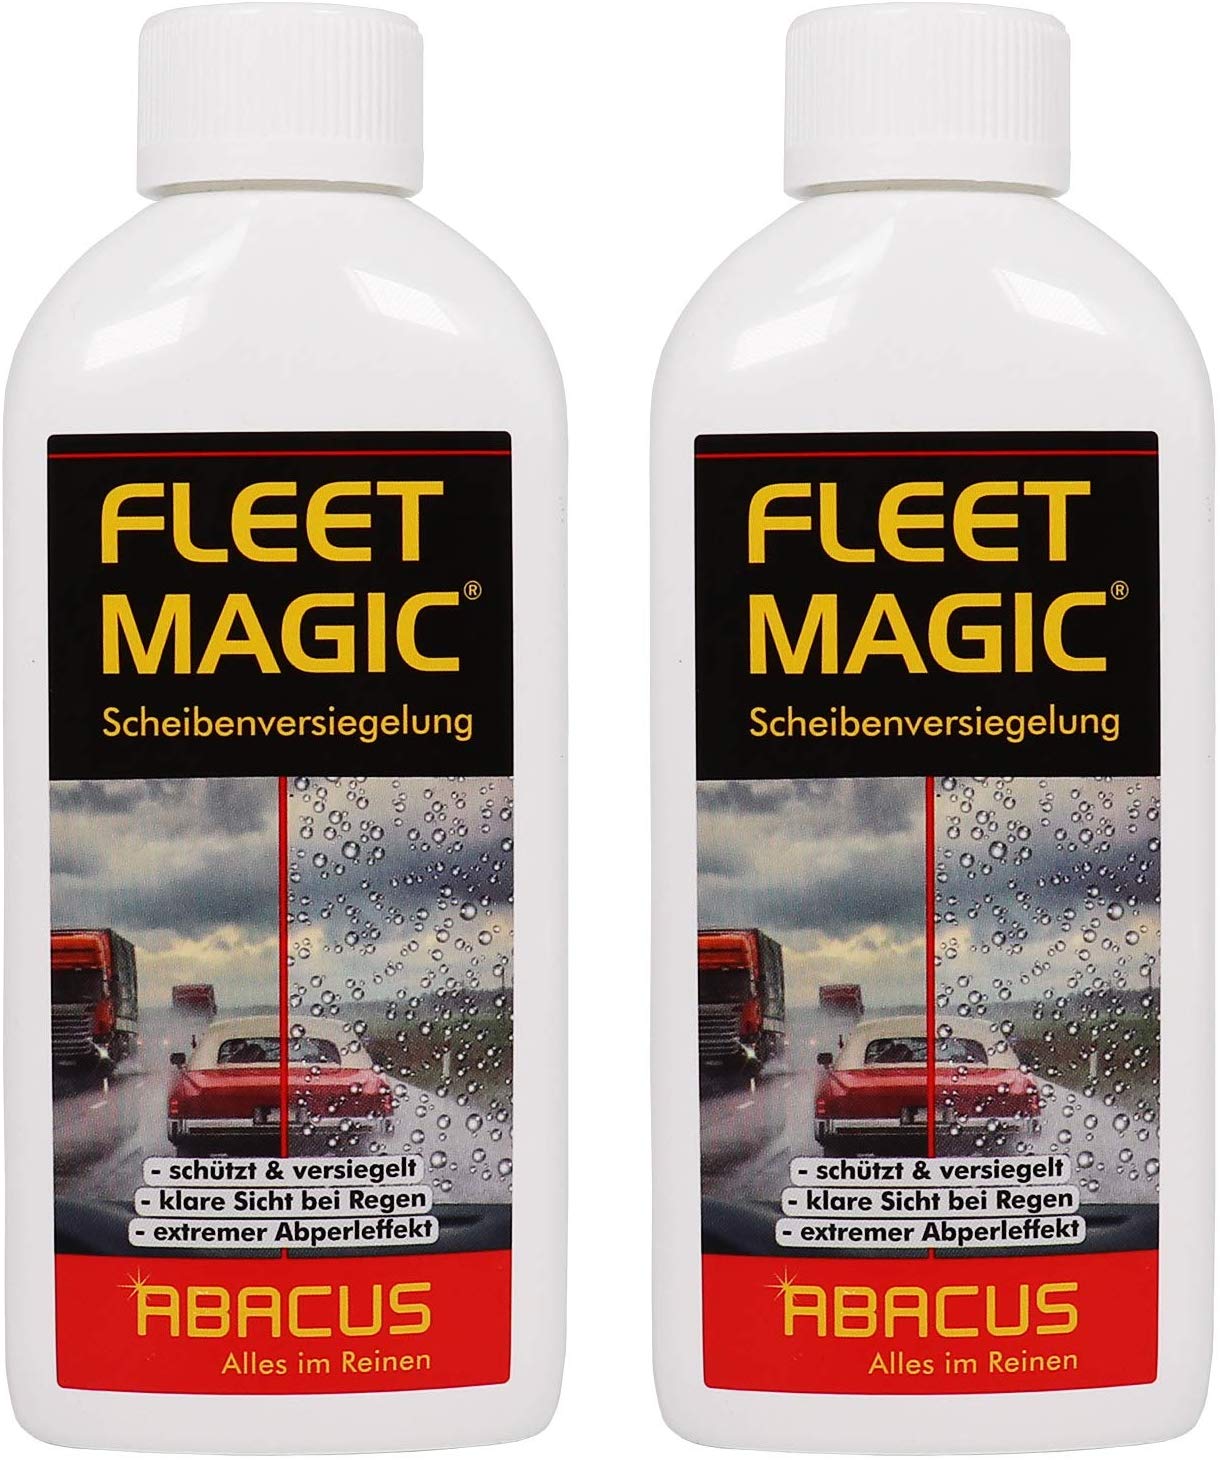 ABACUS® Fleet Magic® Scheibenversiegelung Auto, Glasversiegelung, Nanoversiegelung, Regenabweiser mit Lotus-Effekt